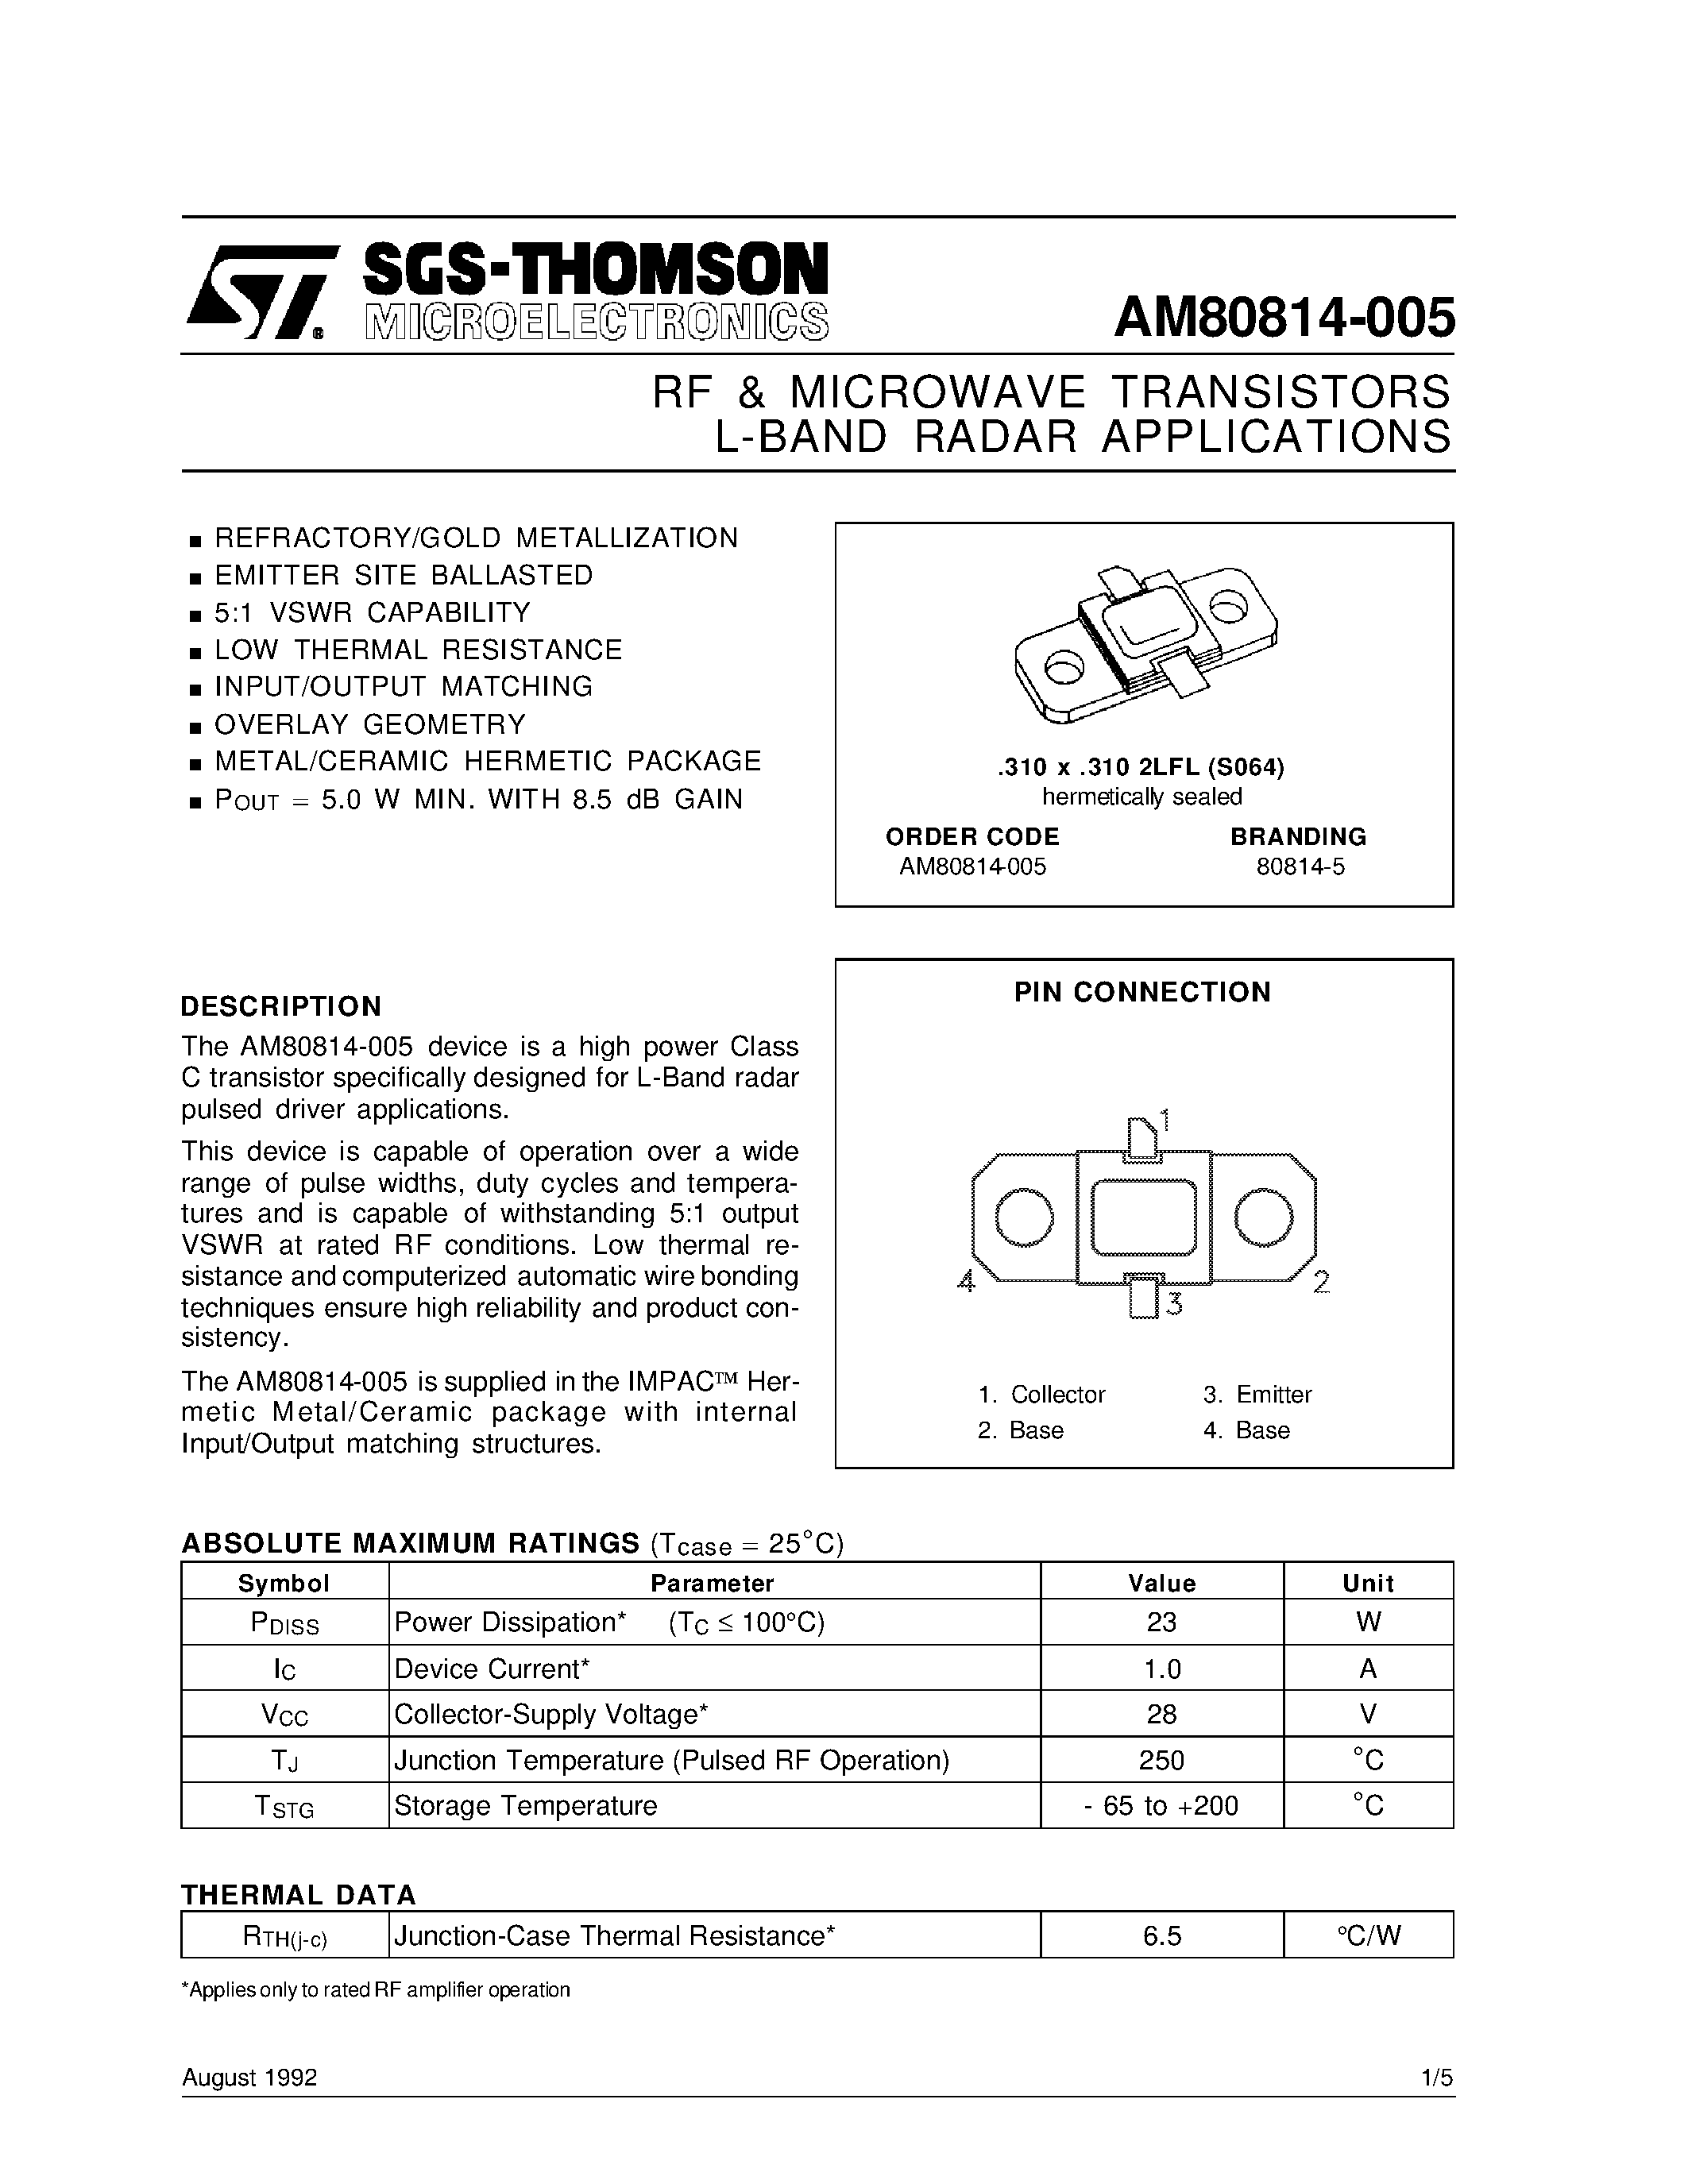 Datasheet AM80814-005 - L-BAND RADAR APPLICATIONS RF & MICROWAVE TRANSISTORS page 1